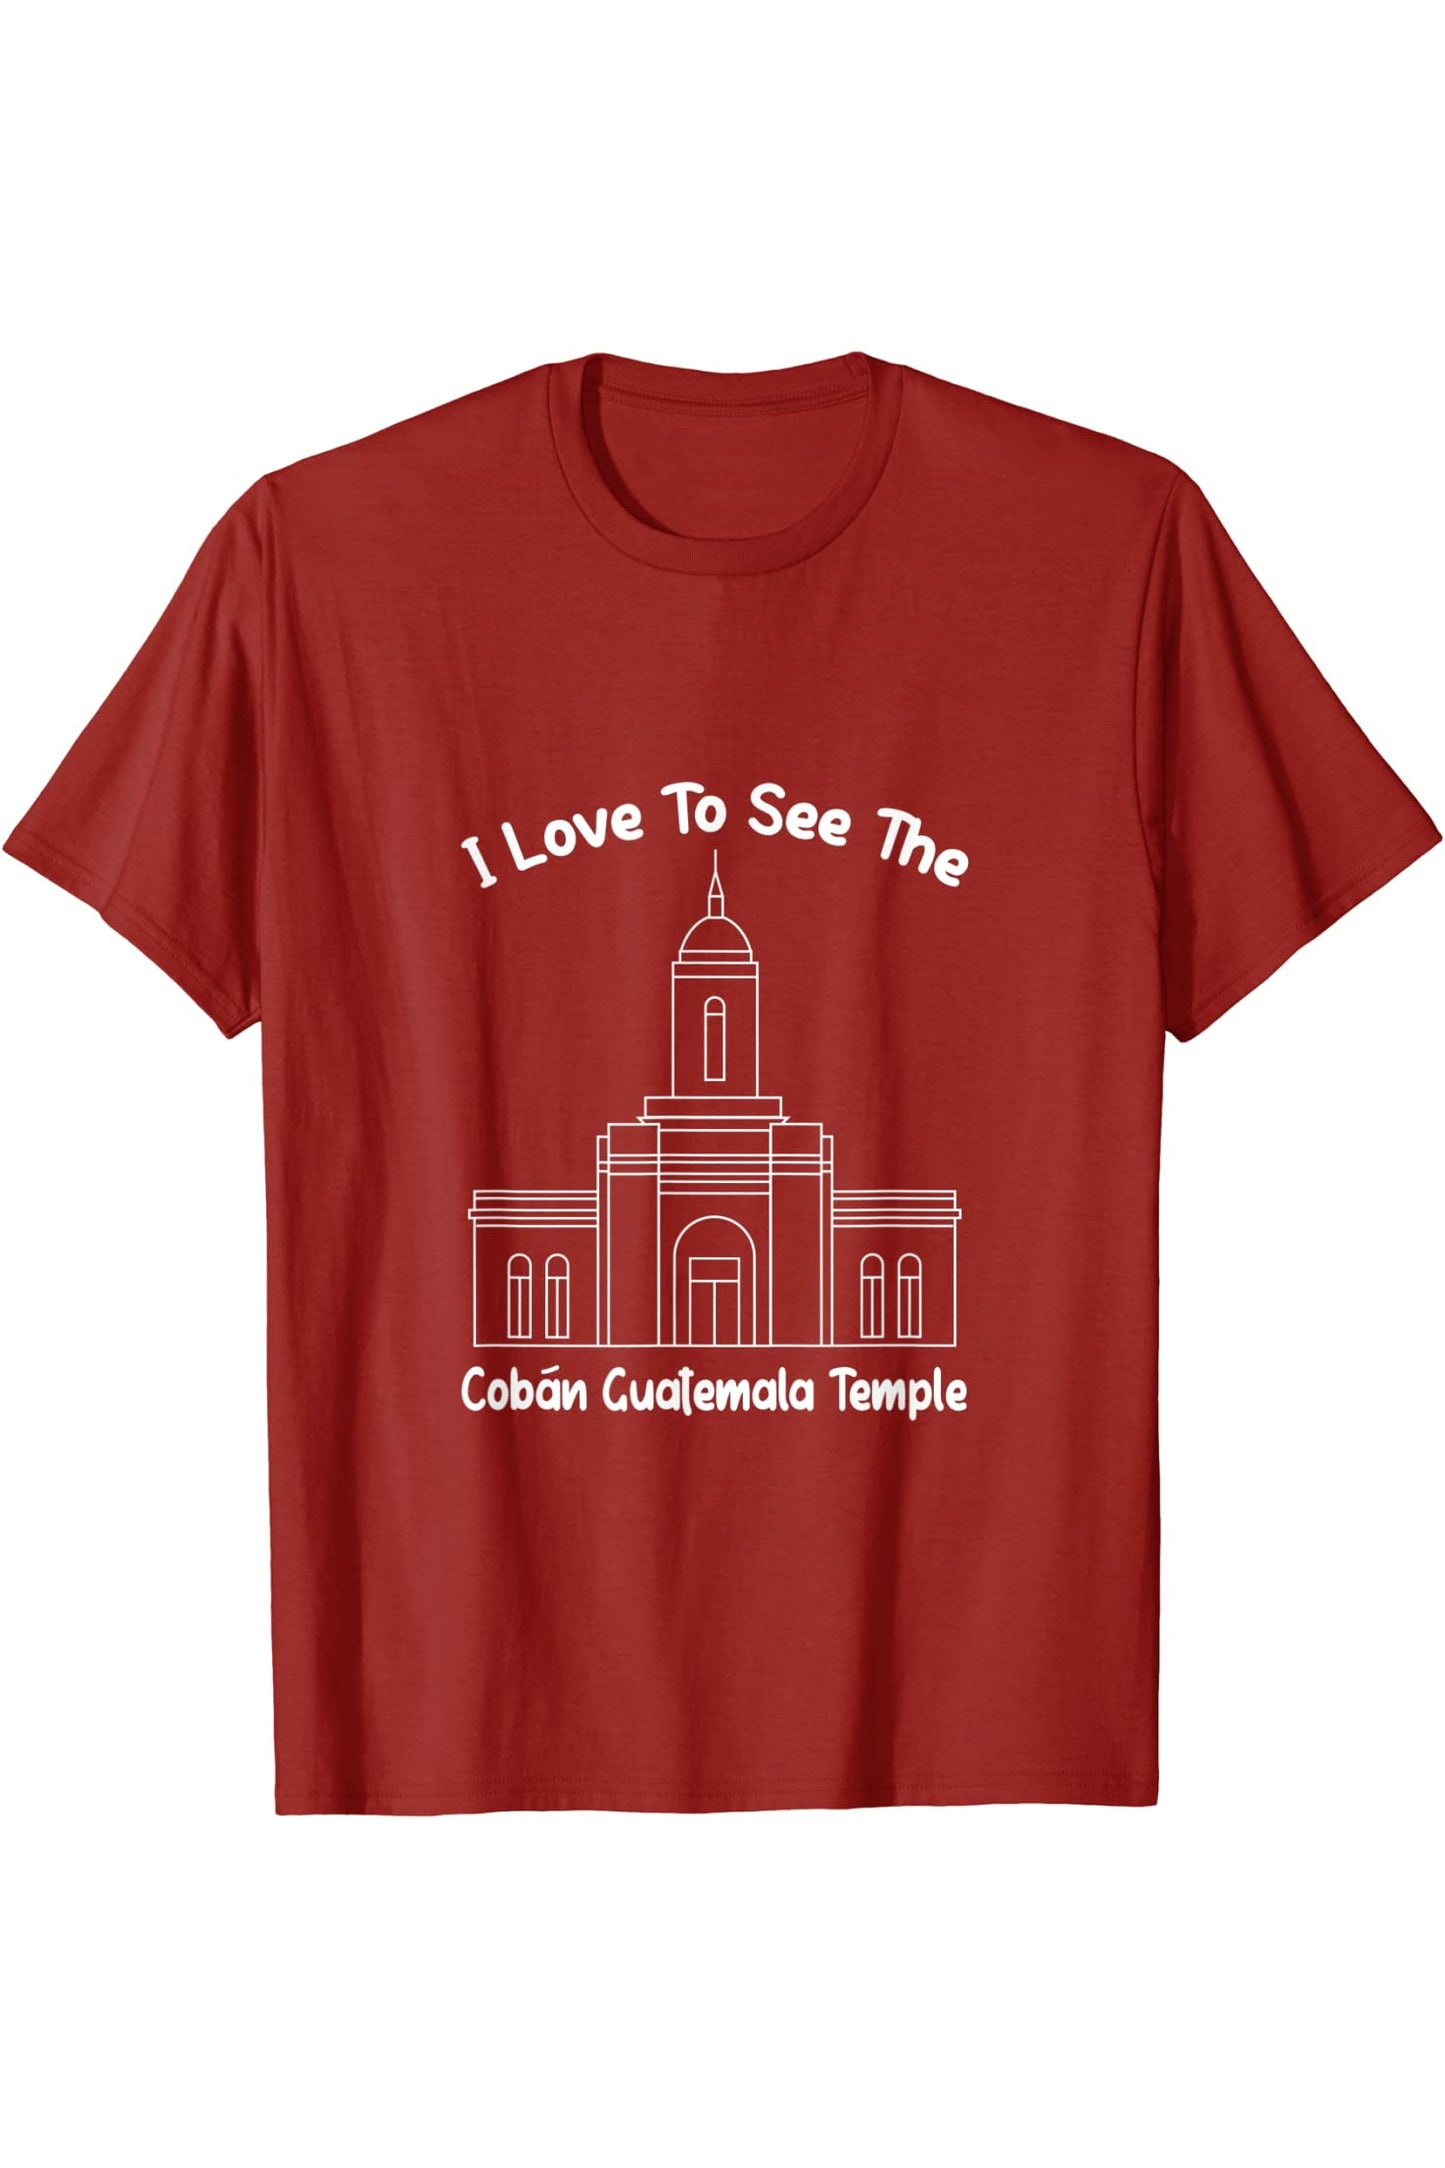 Coban Guatemala Temple T-Shirt - Primary Style (English) US